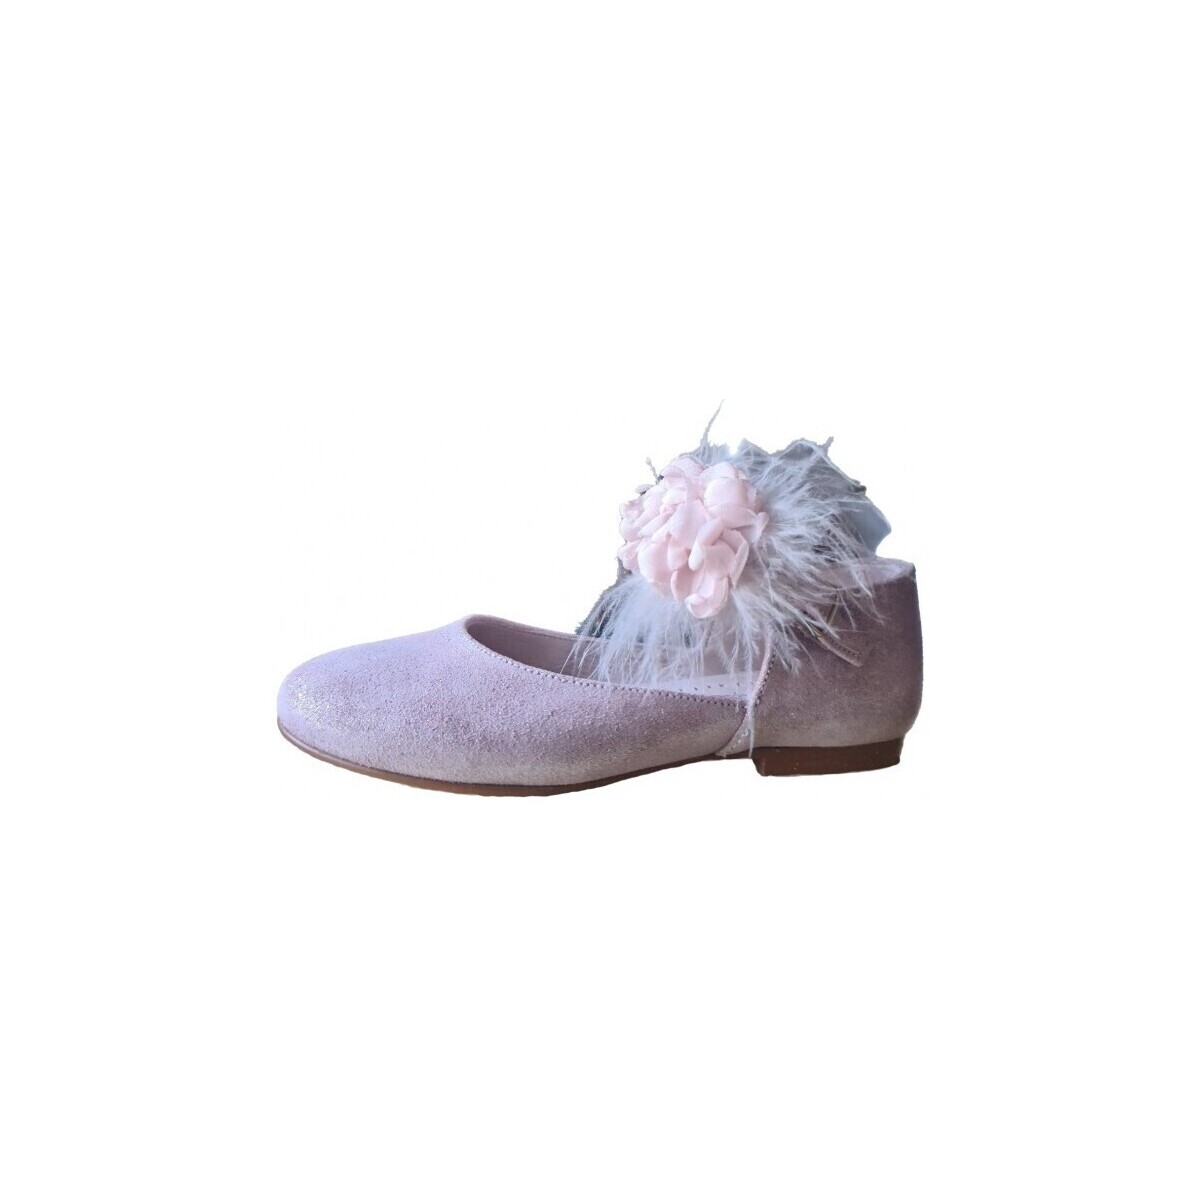 Schuhe Mädchen Ballerinas Yowas 25993-18 Rosa